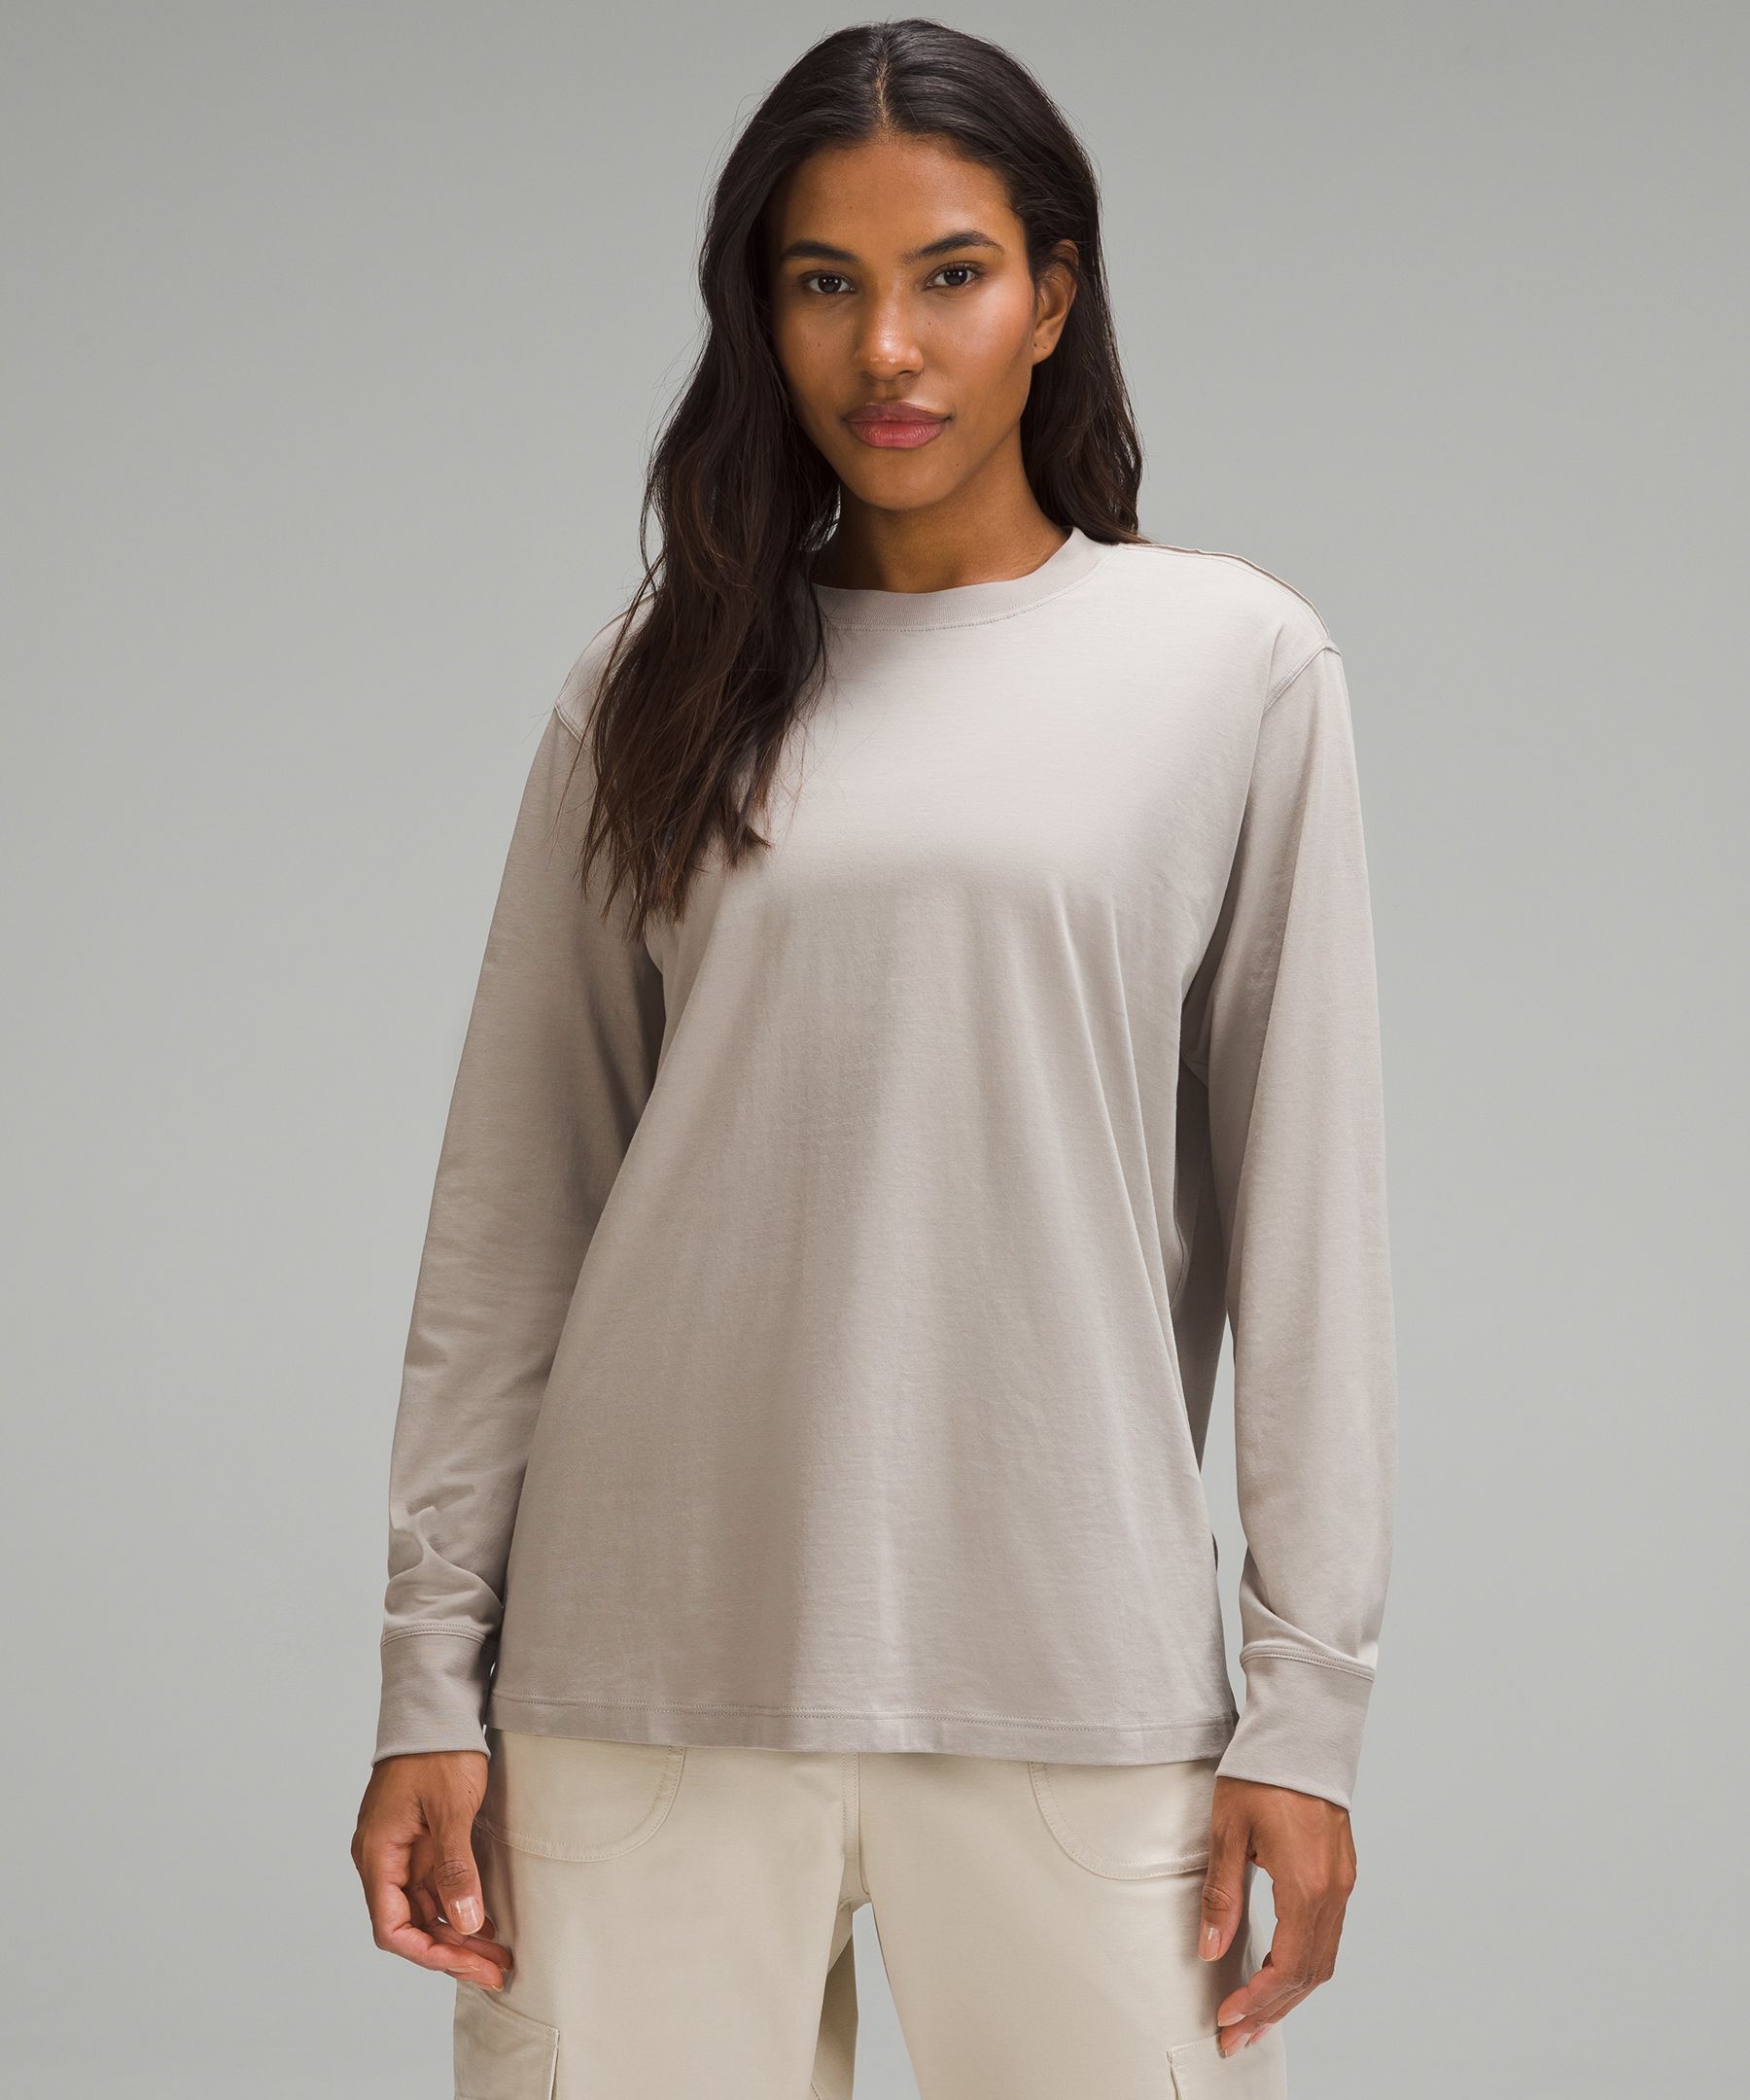 All Yours Long-Sleeve Shirt | Women's Long Sleeve Shirts | lululemon